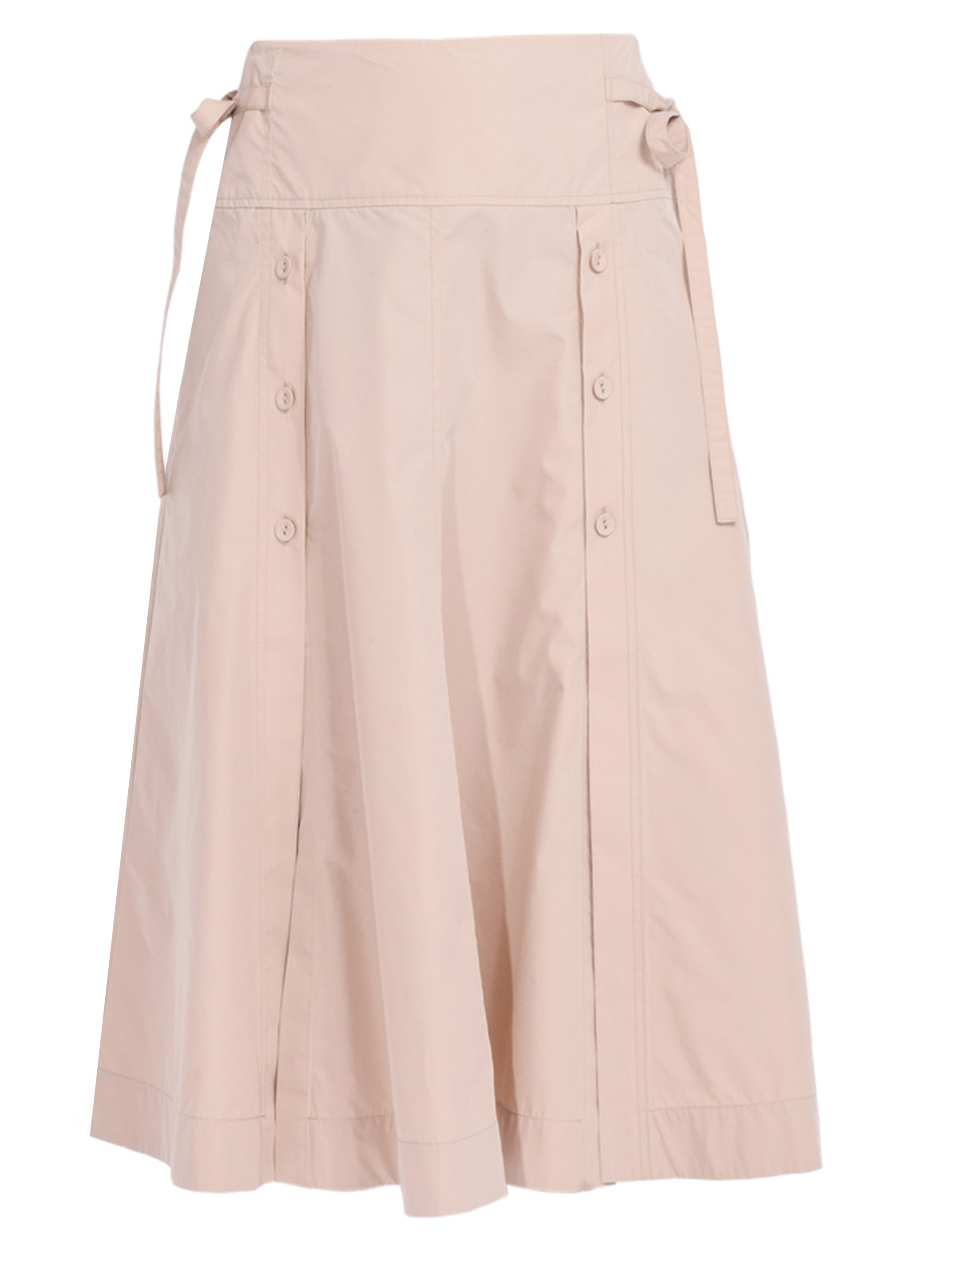 3.1 Phillip Lim Button Front Tie Waist Midi Skirt in Khaki Product Shot 